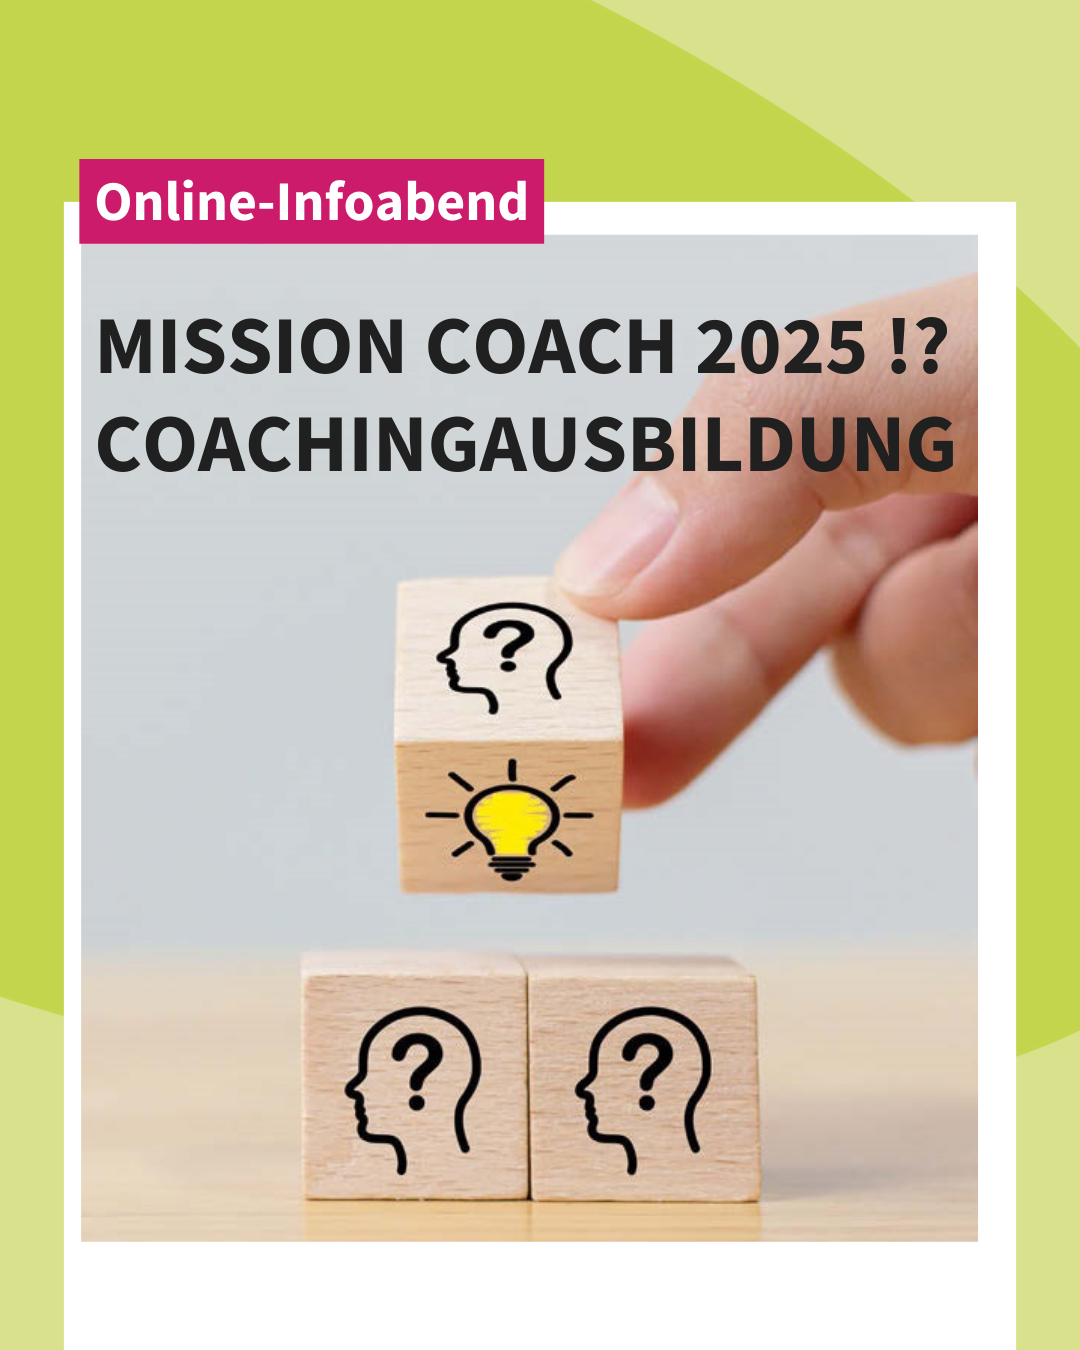 Infoabend zur Coachingausbildung Hannover